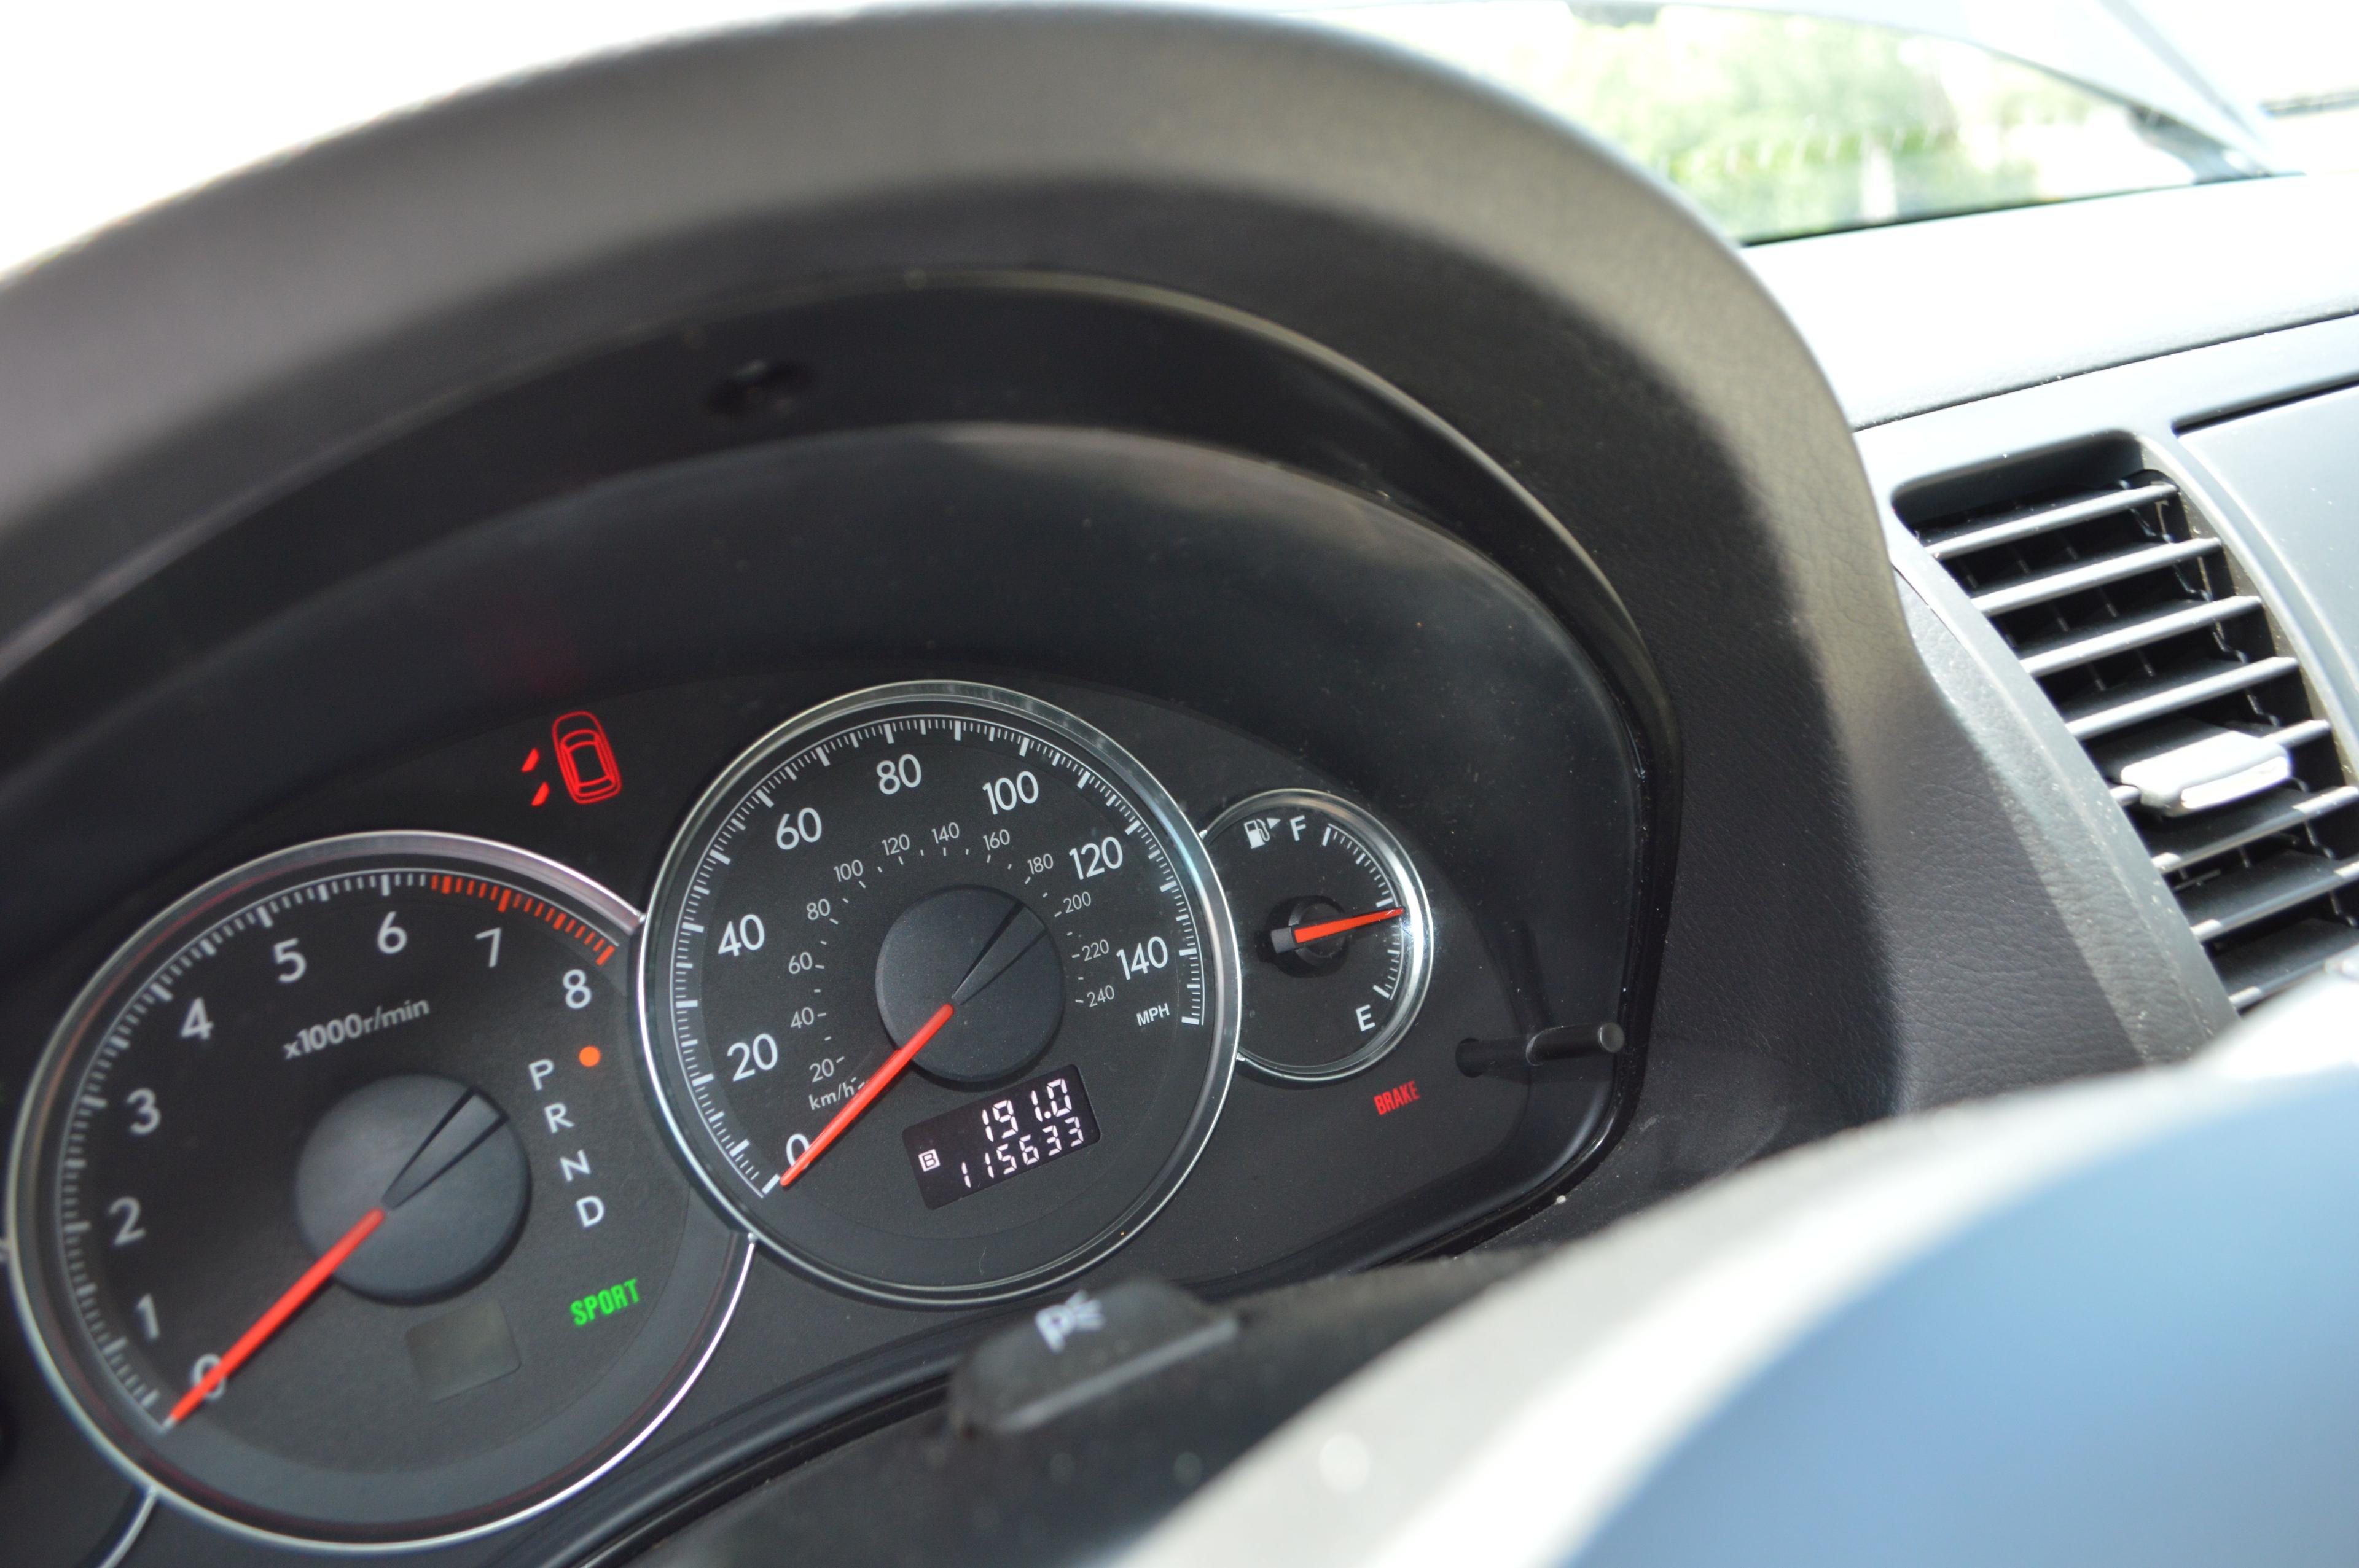 2008 Subaru Outback 4x4, All Wheel Drive, 115,000 Miles, Tires: 225/66r-16